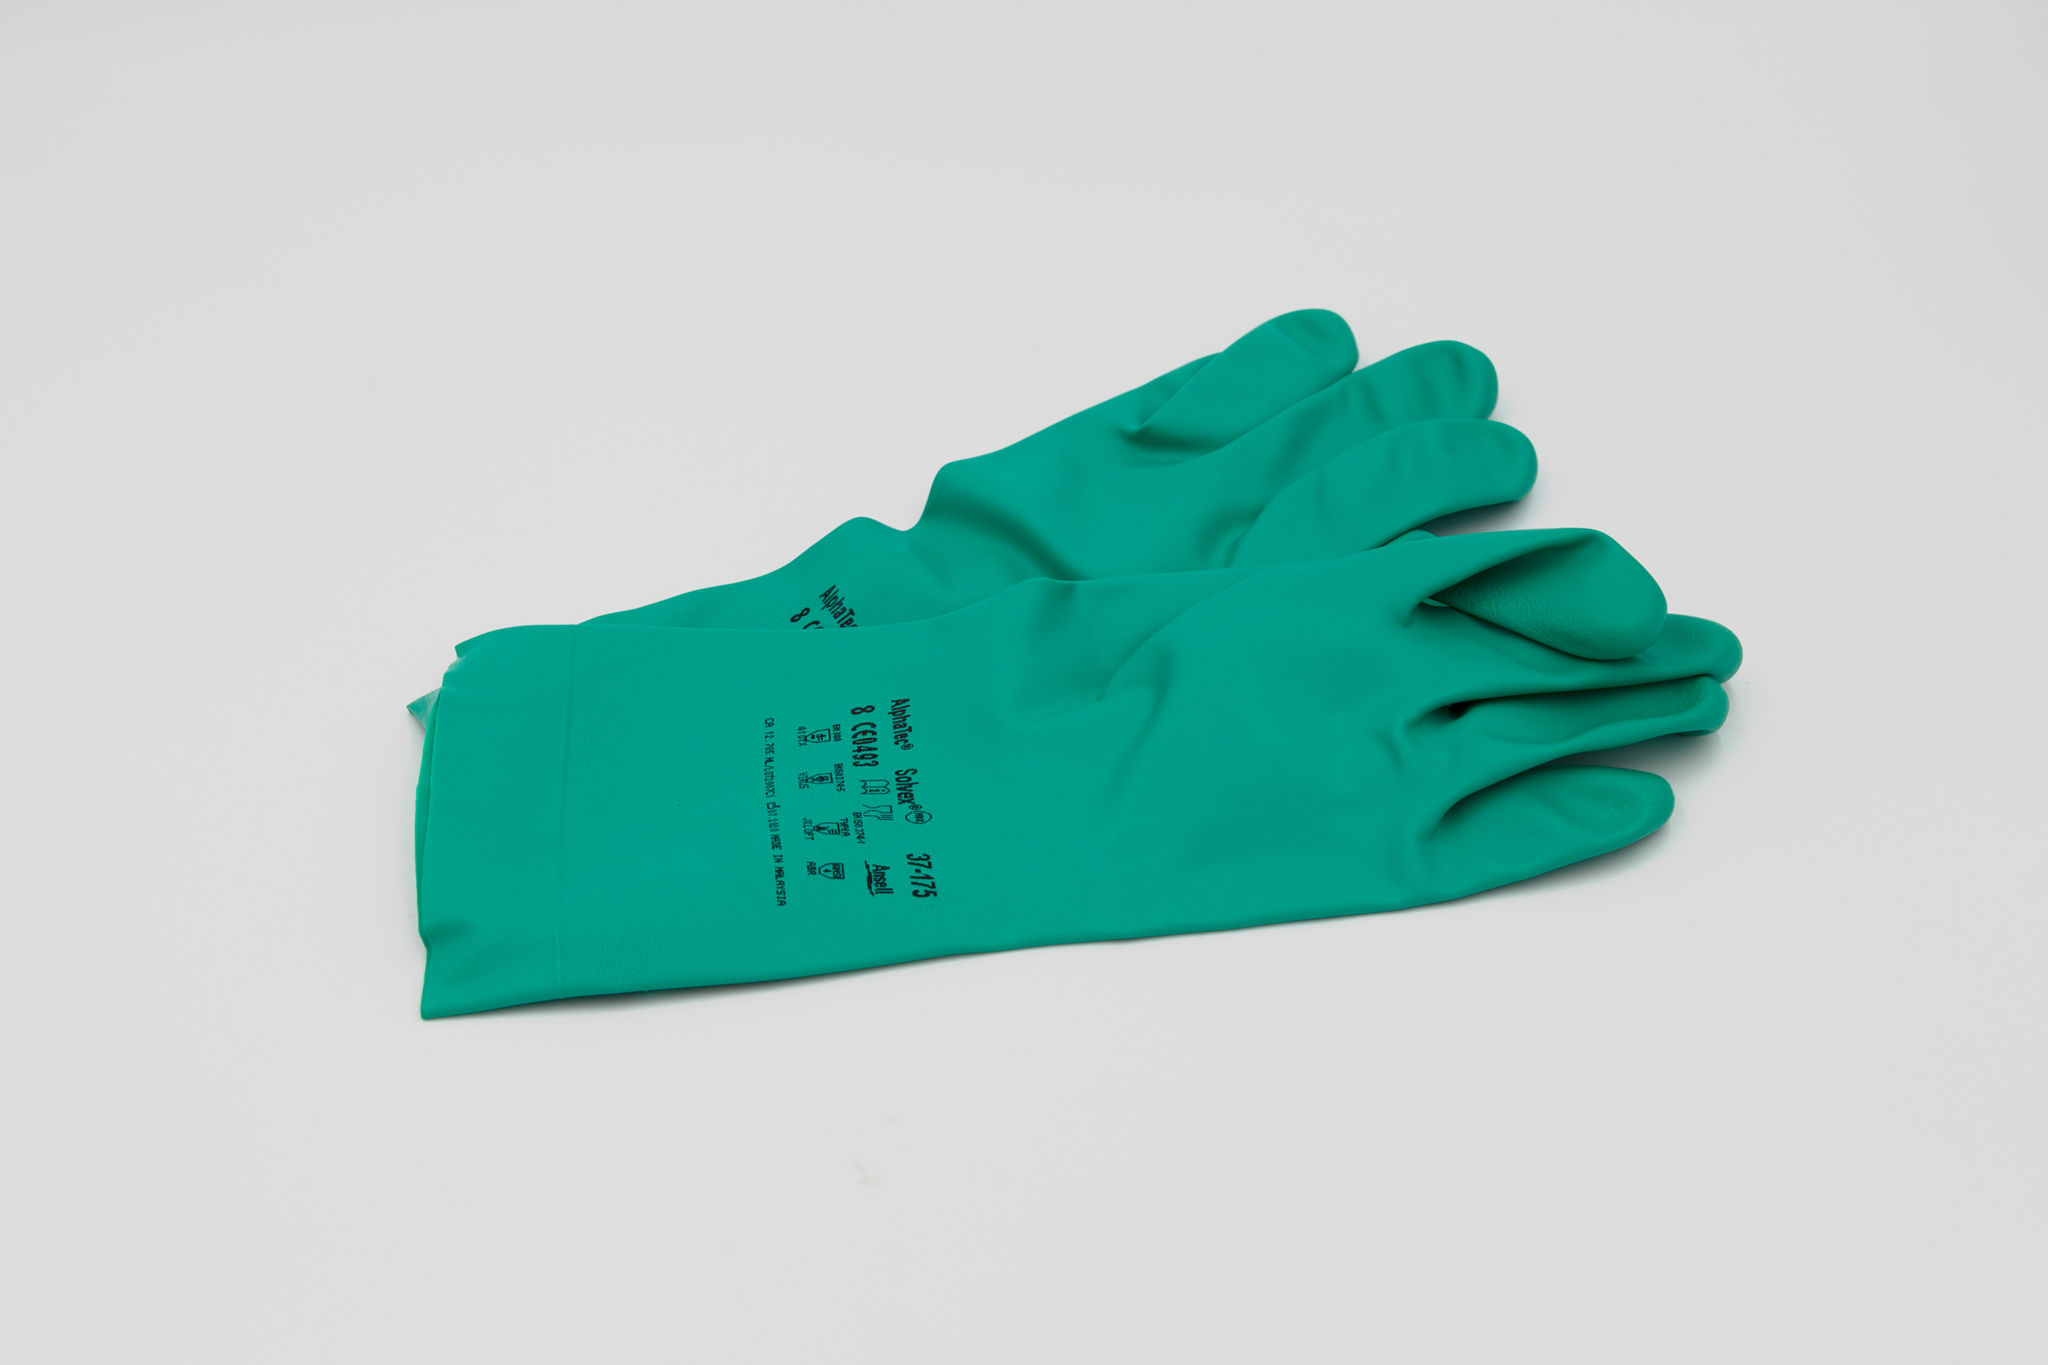 Turquoise gloves on white background